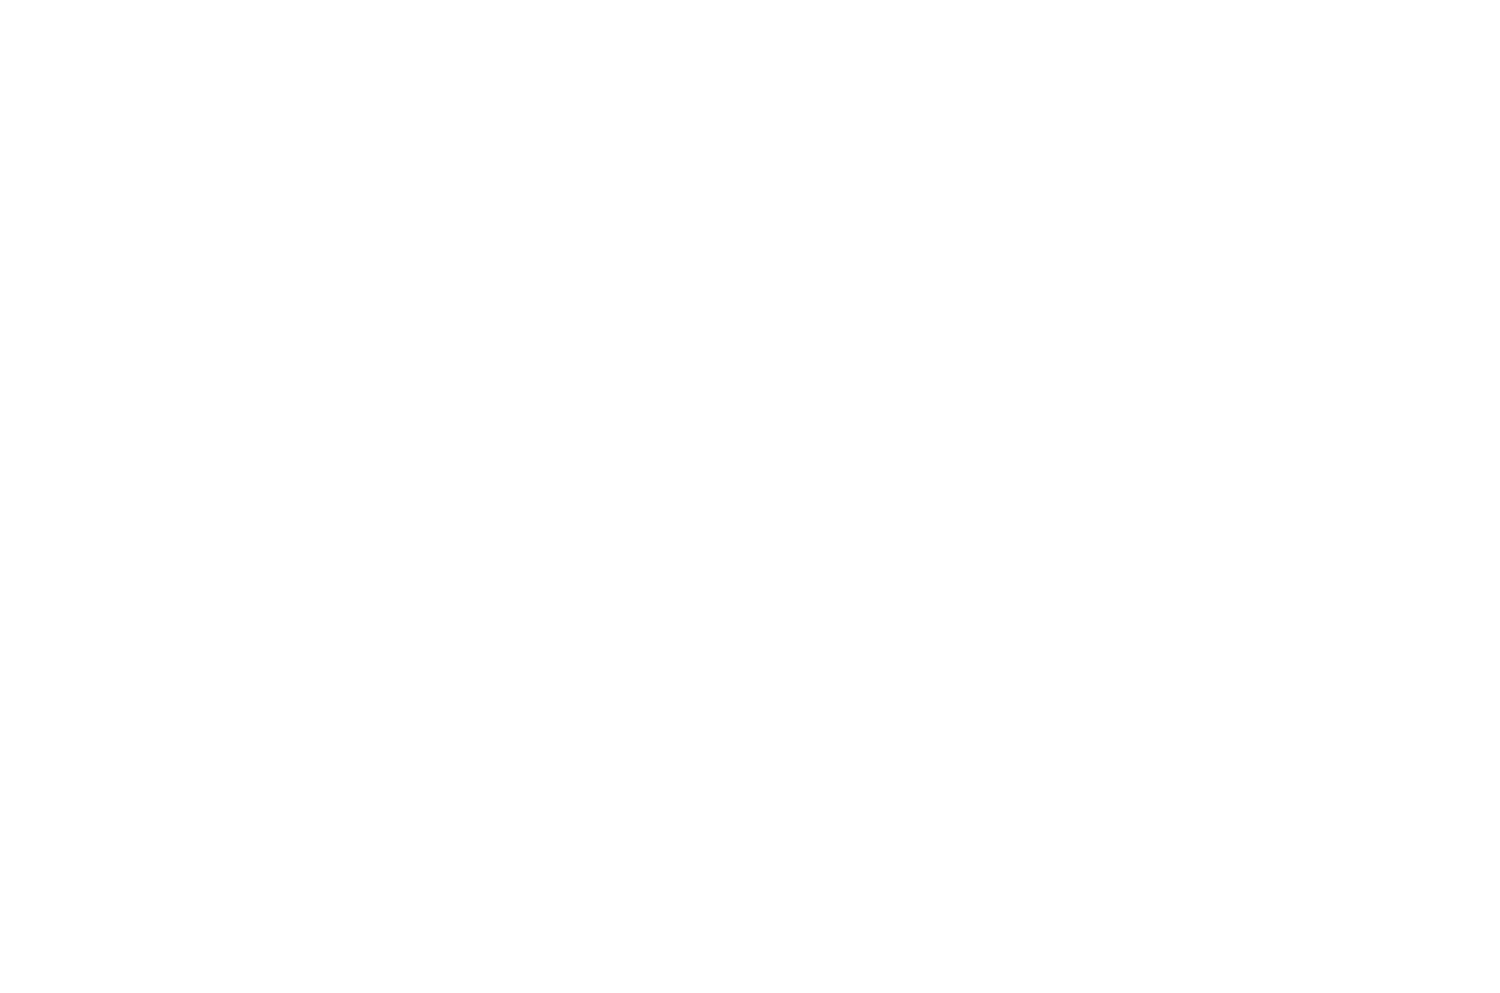 Craftivist